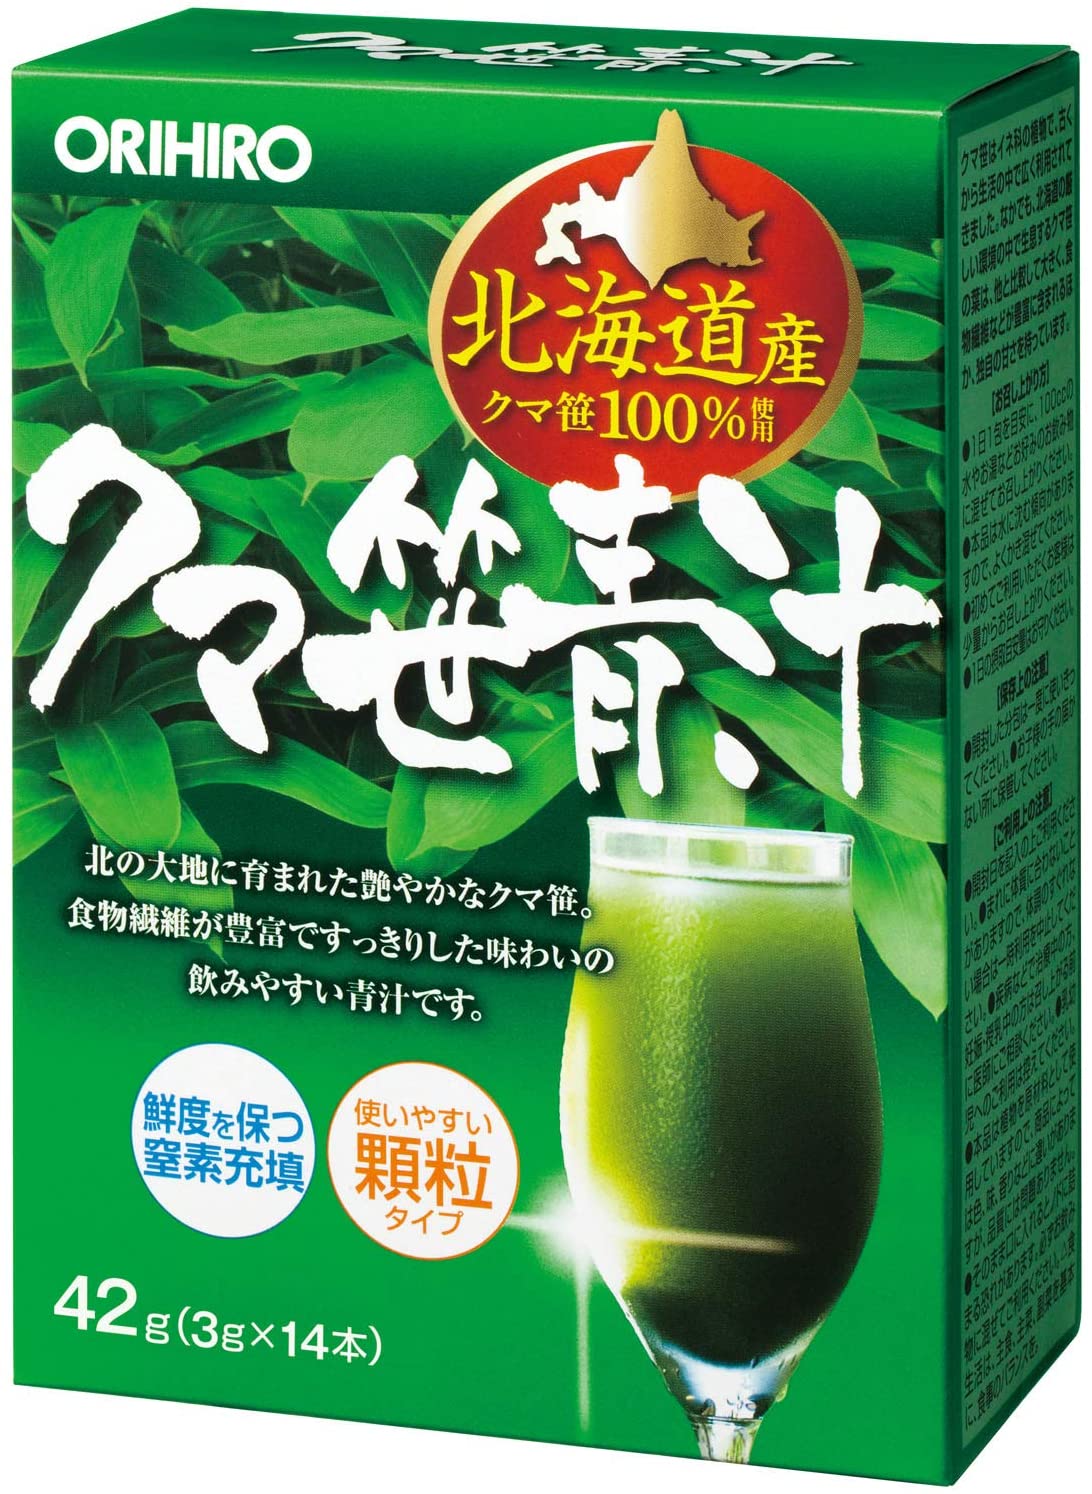 Зеленый сок с листьями бамбука Orihiro, 3 гр х 14 шт